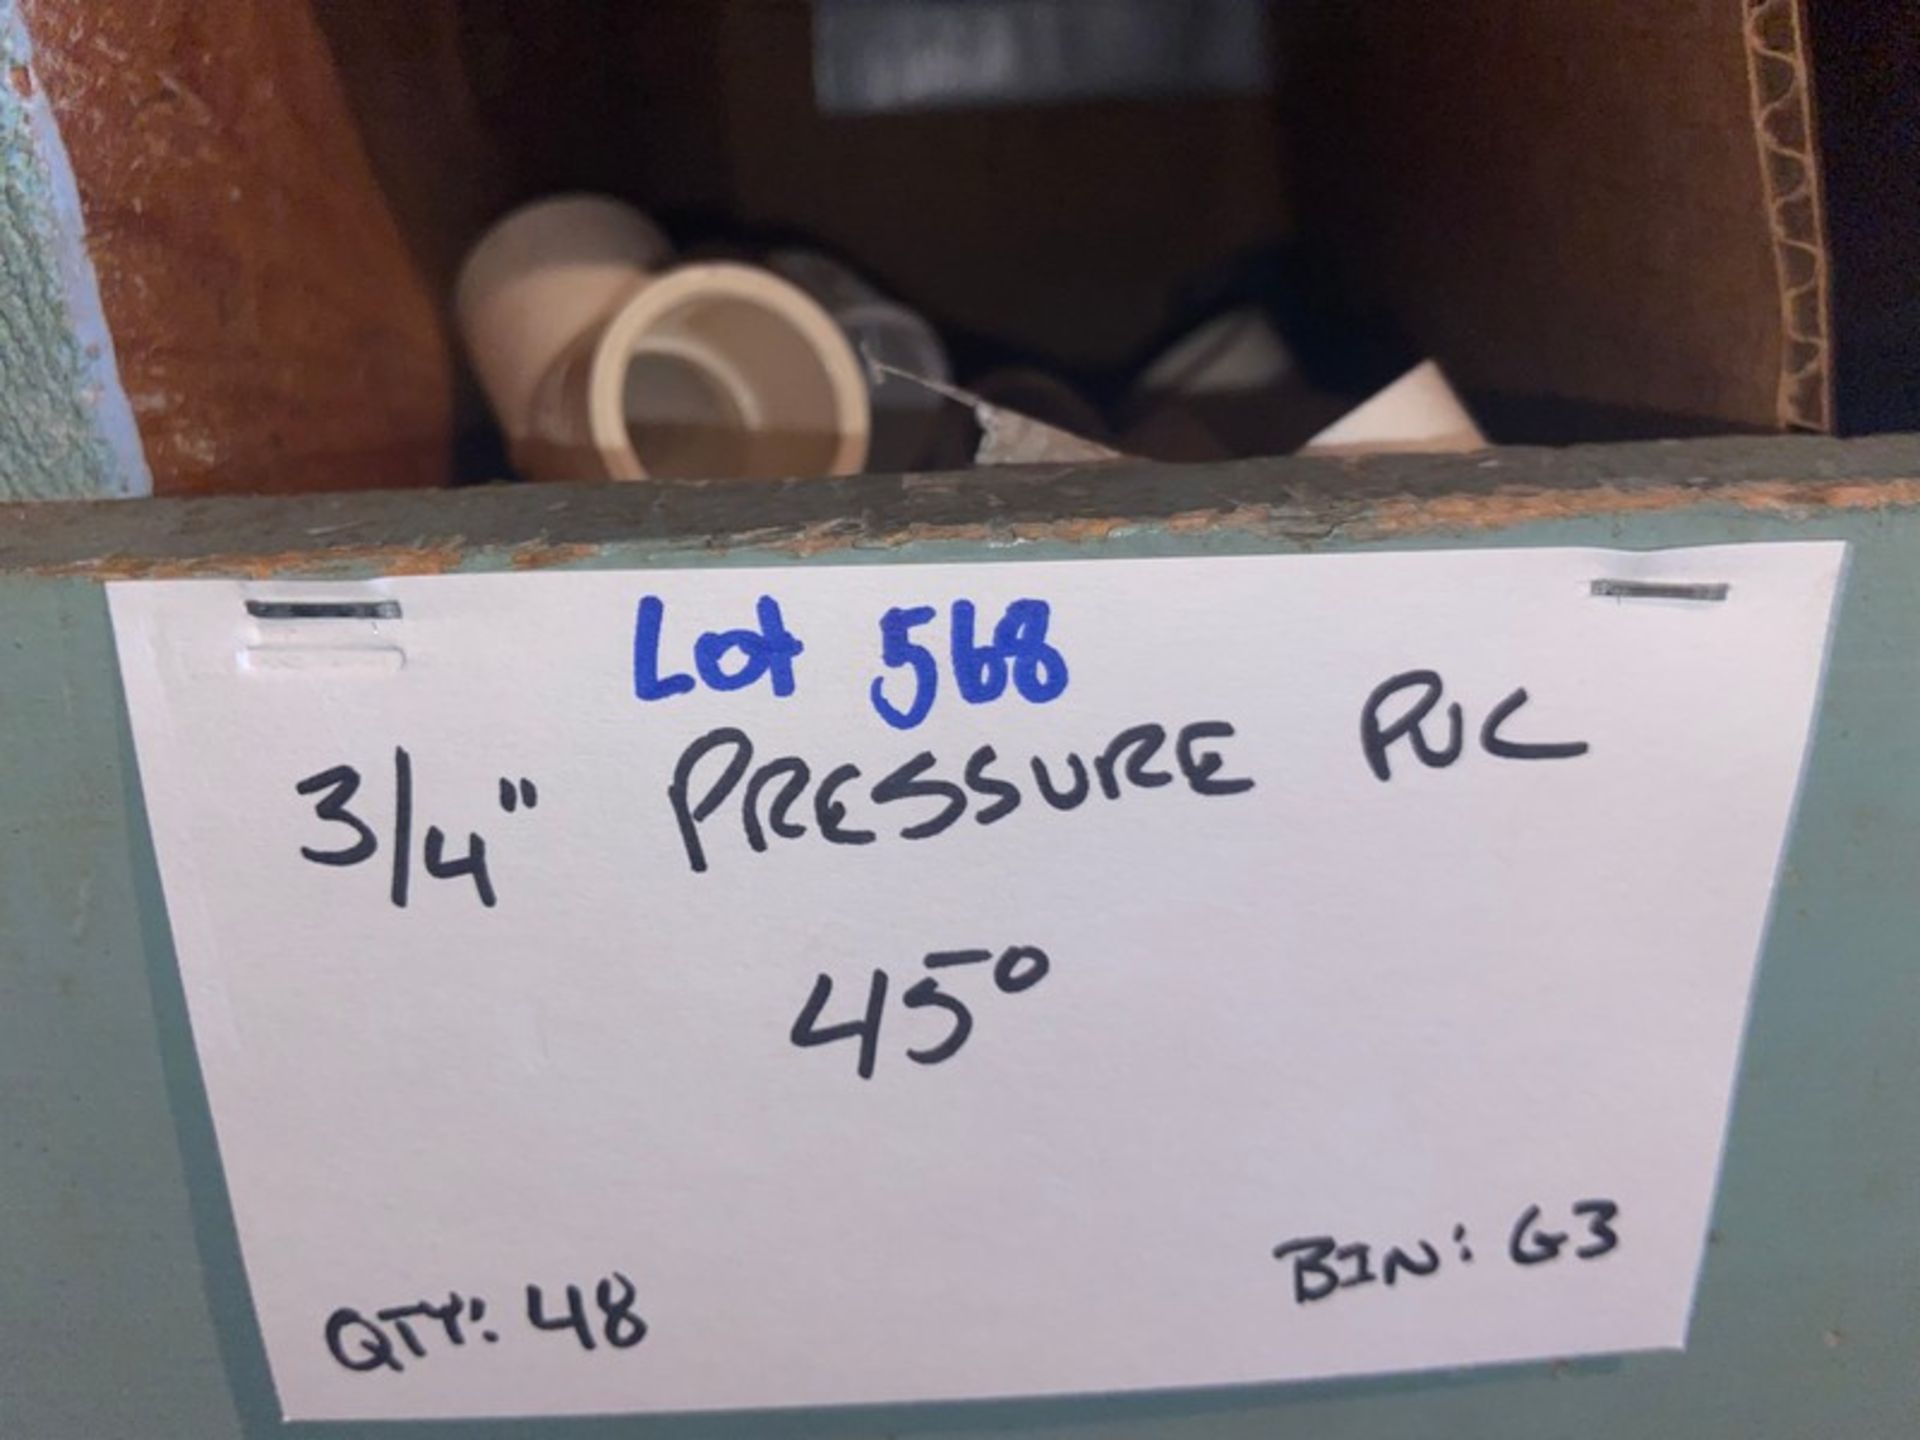 (15) 3/4” Pressure PVC Stree5 (Bin:G3), Includes (48) 3/4” Pressure PVC 45’ (Bin:G3) (LOCATED IN - Image 5 of 8